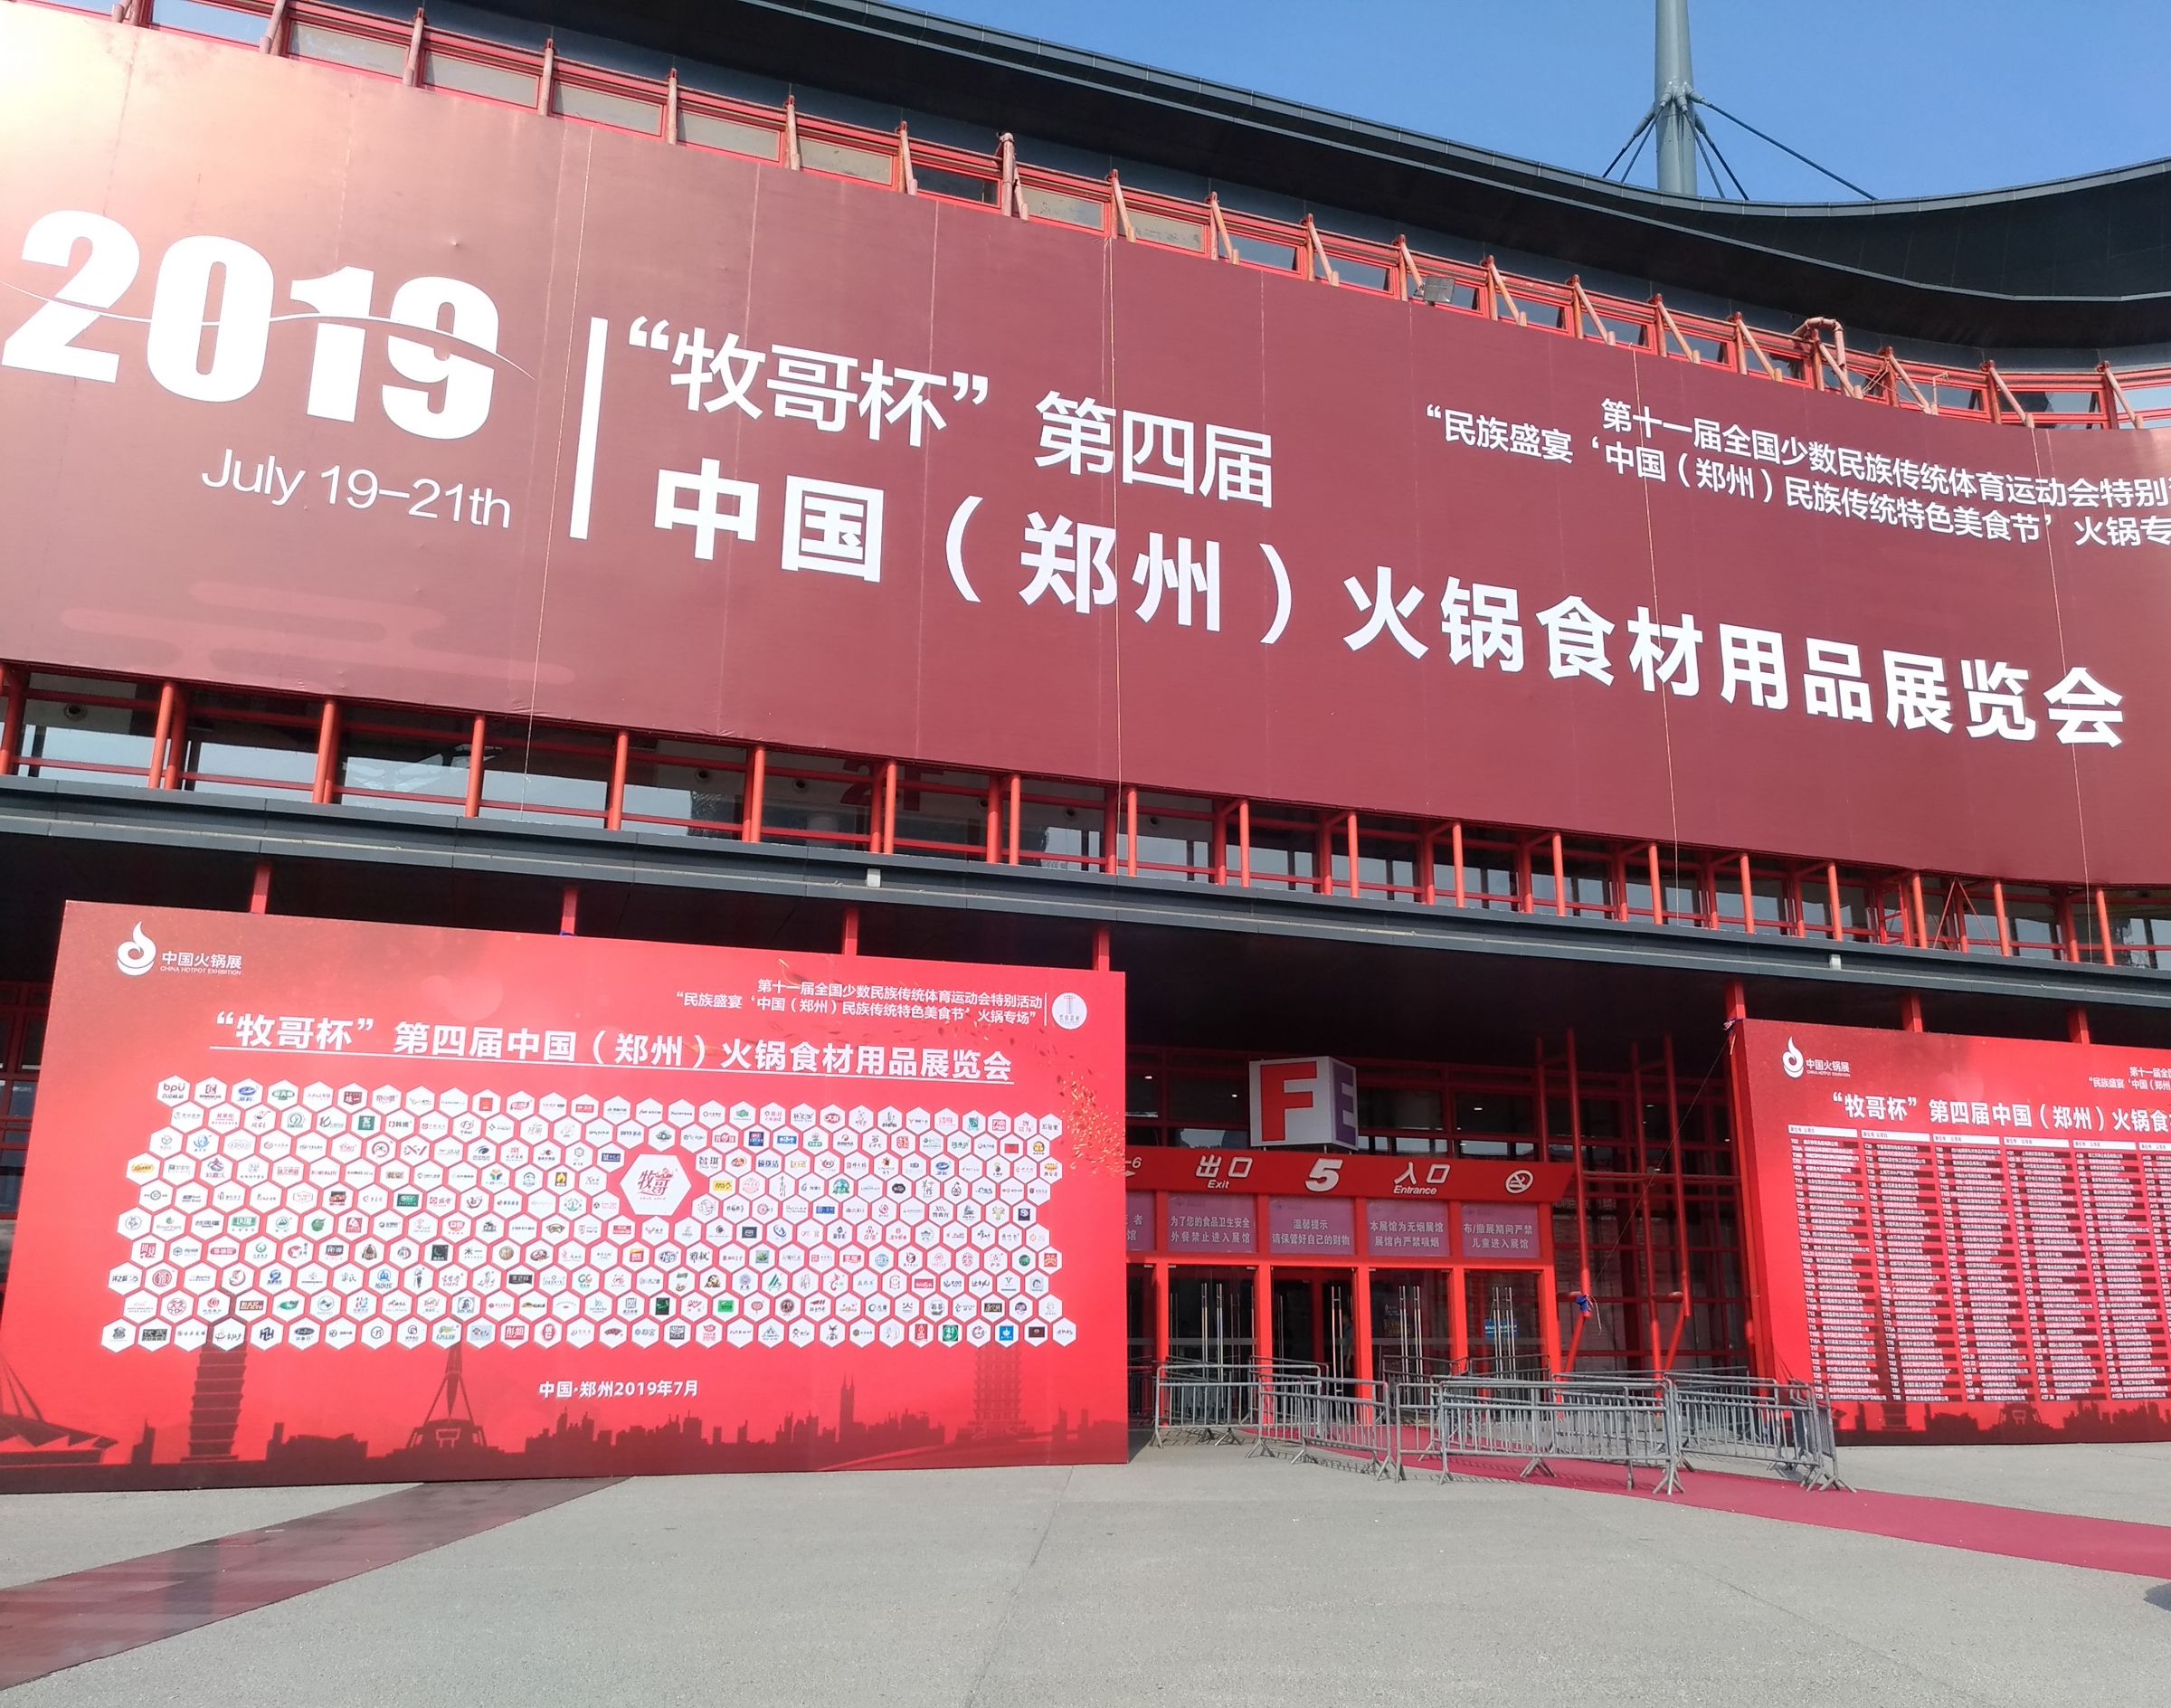 2019 Kina (Zhengzhou) International Hot Pot Food Products udstilling